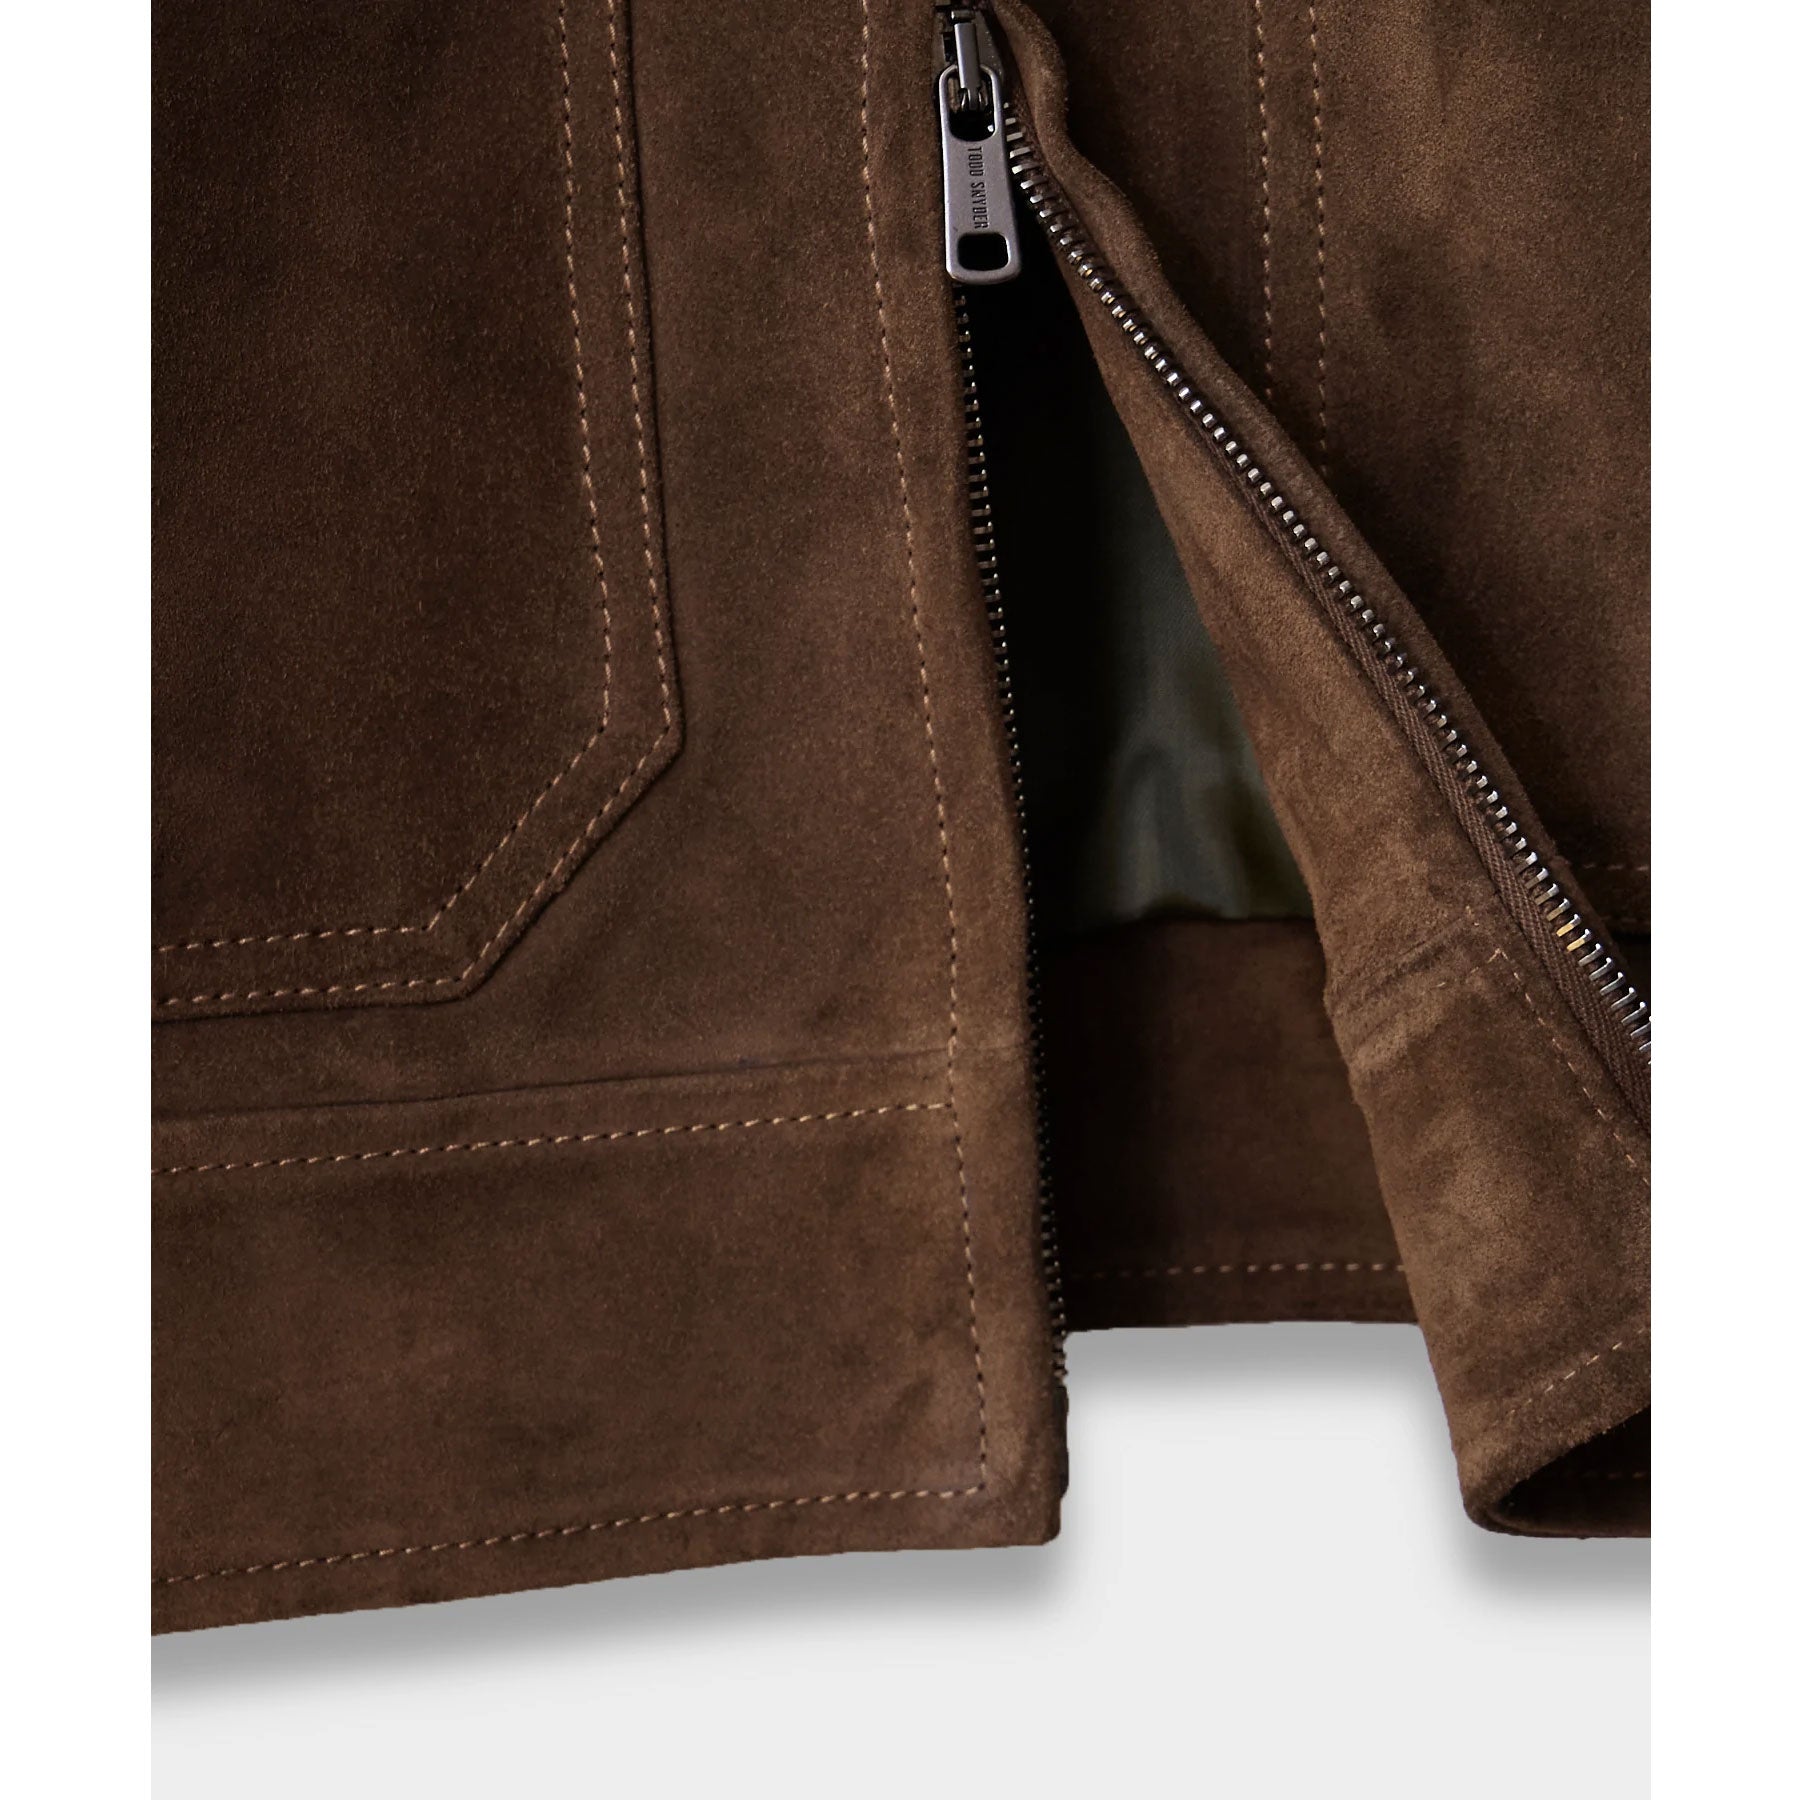 Men's Tan Leather Suede Bomber Jacket - Brown Bomber Jacket